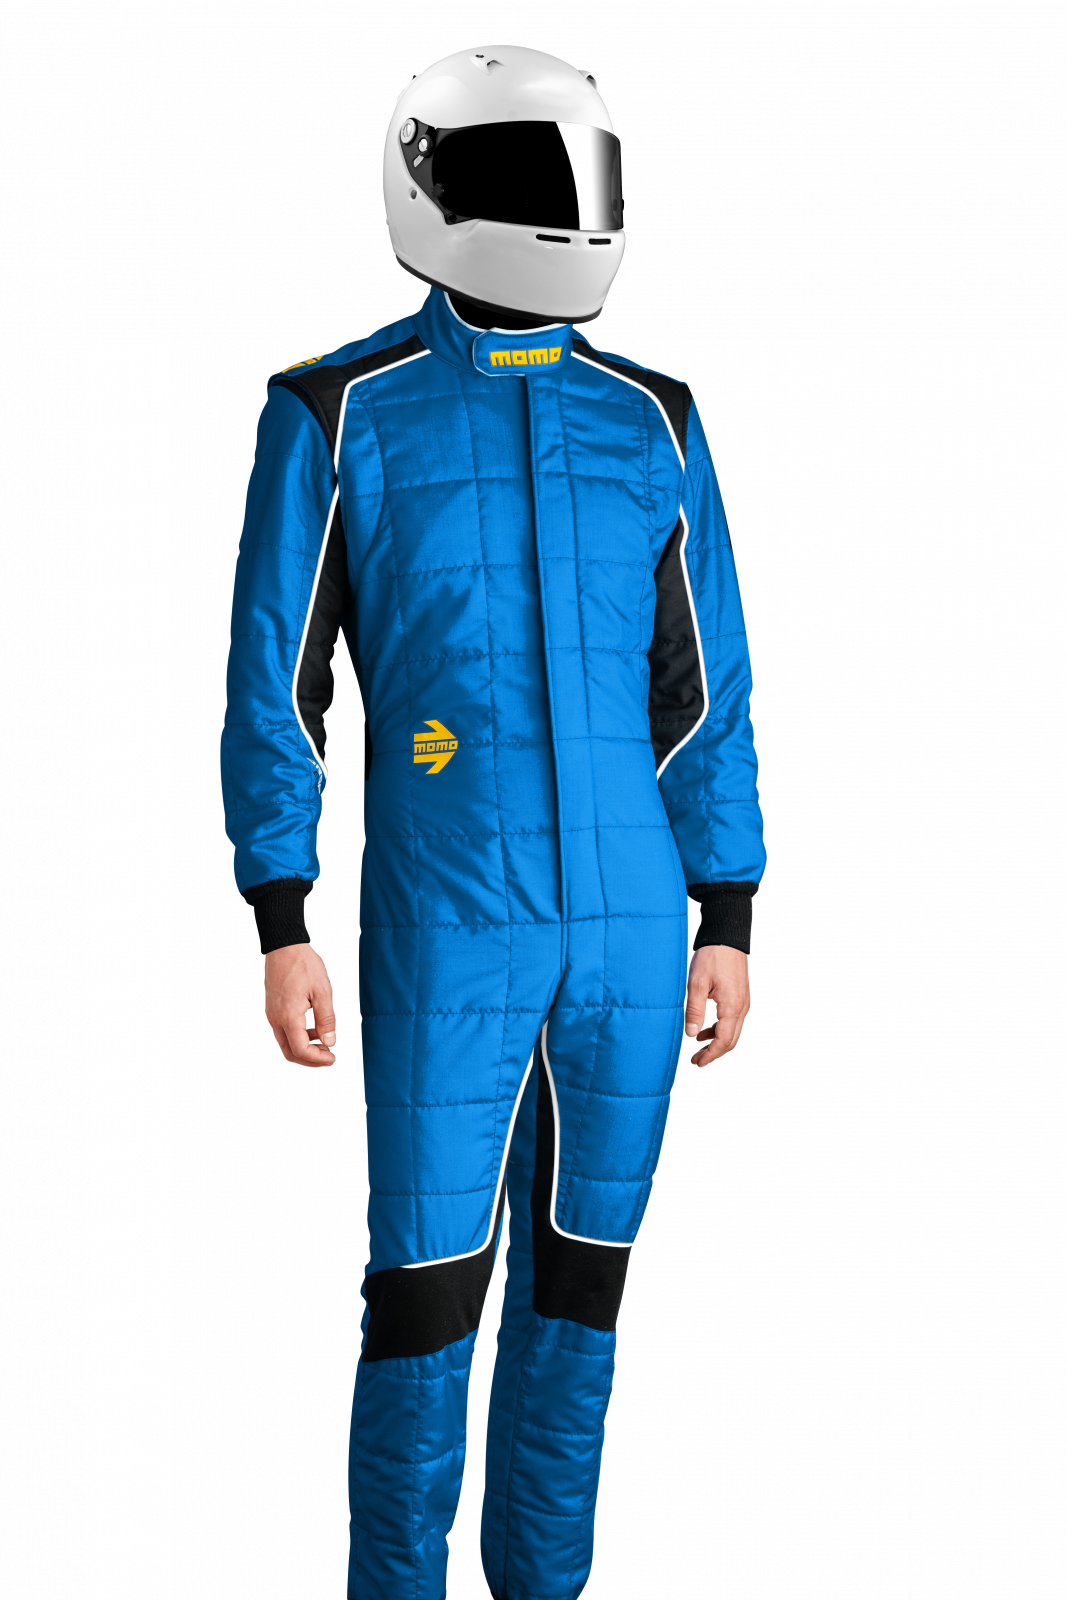 MOMO Corsa Evo Blue Size 64 Racing Suit TUCOEVOBLU64